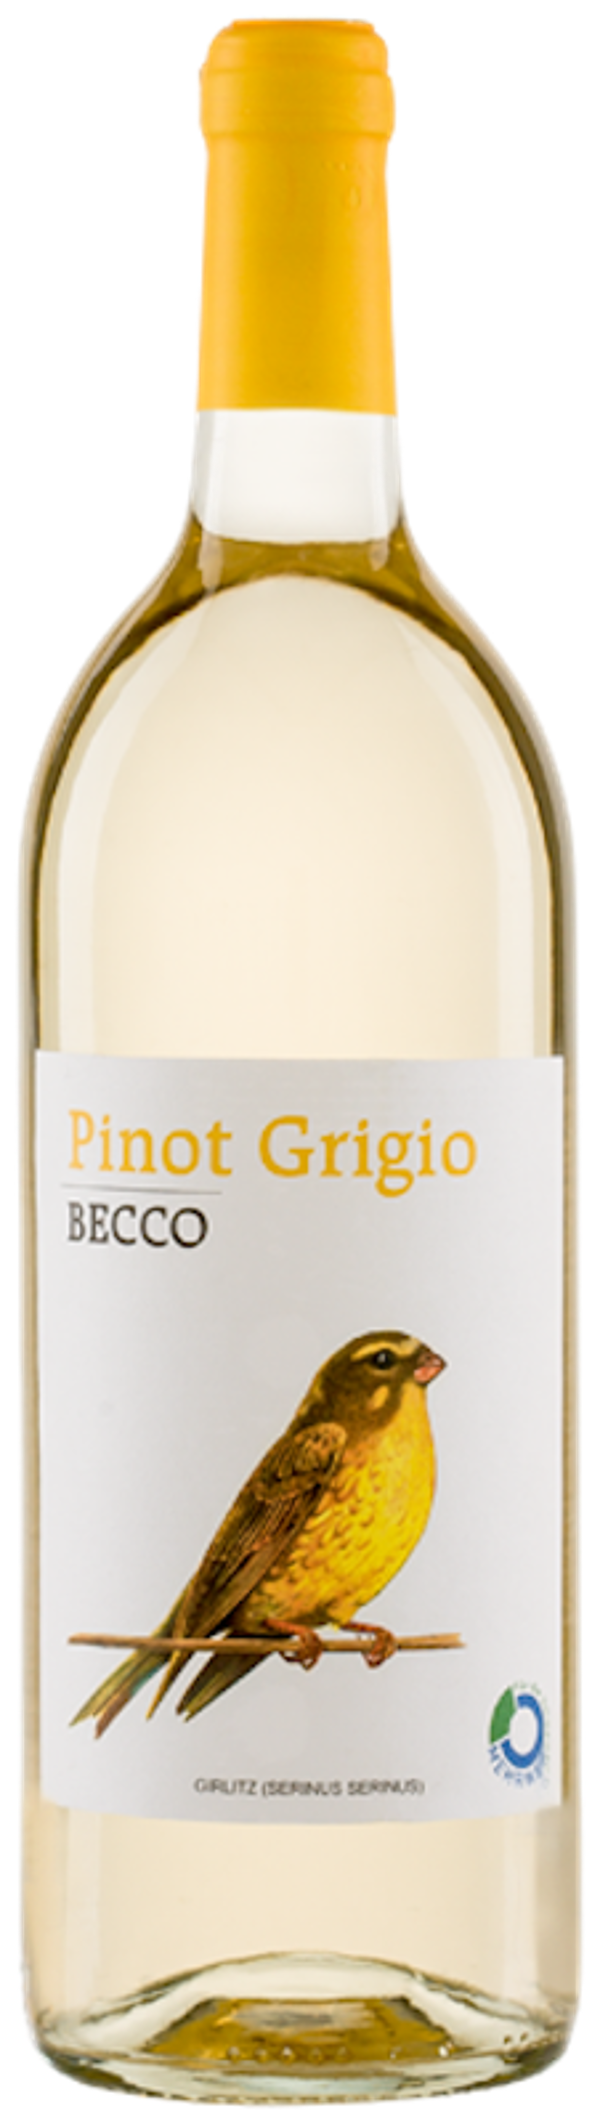 Produktfoto zu BECCO Pinot Grigio IGT